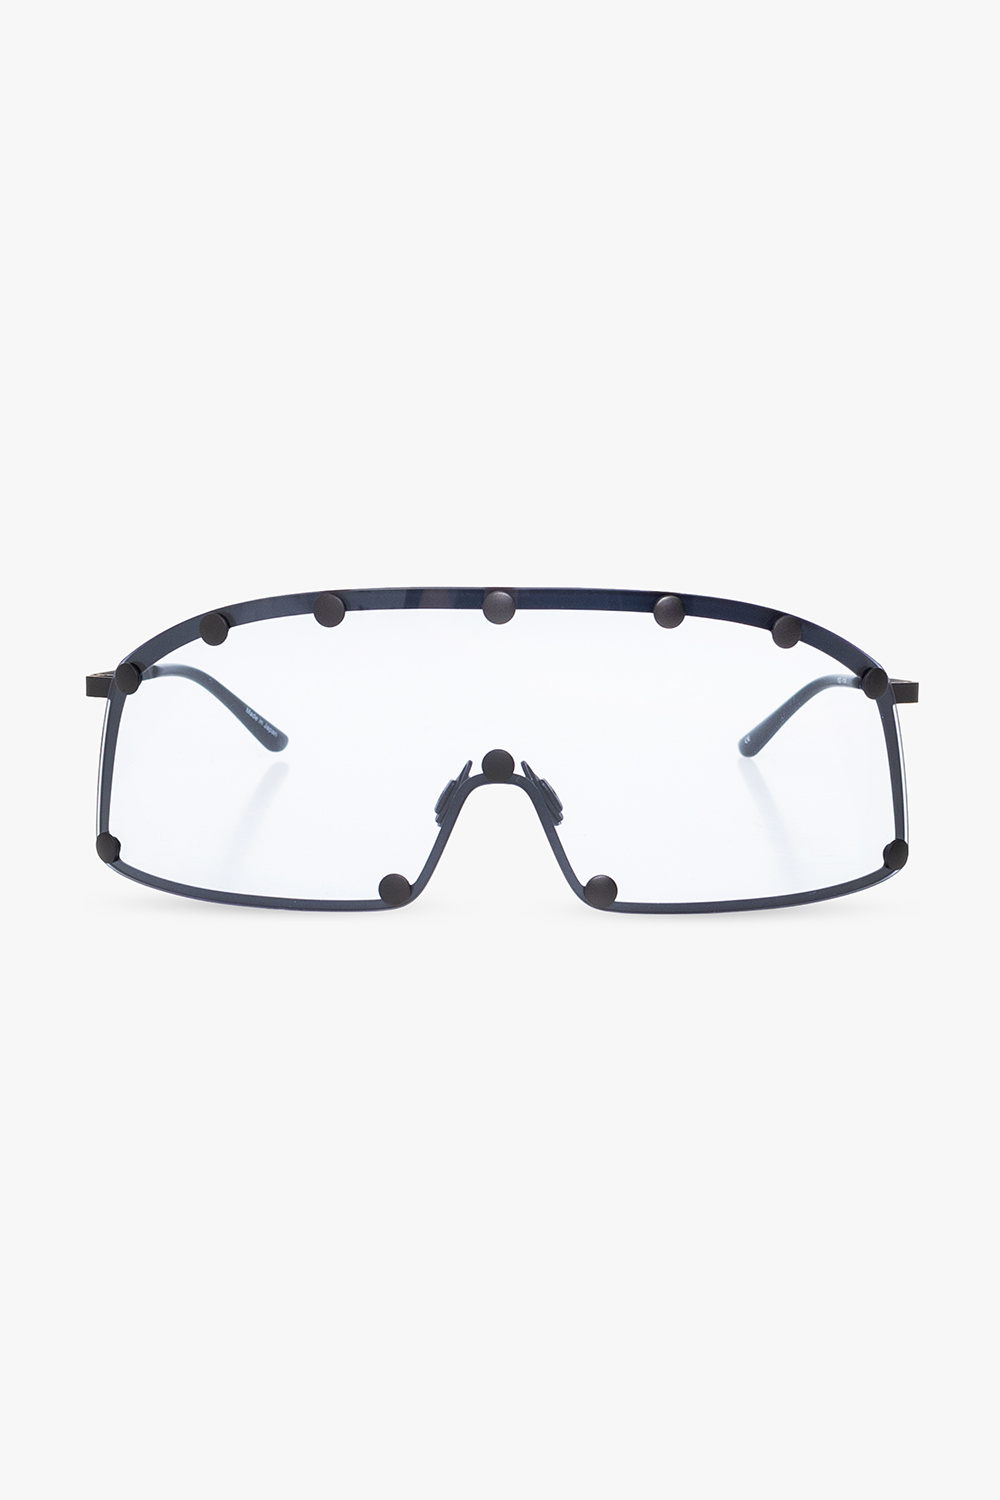 Rick Owens ‘Shielding’ sunglasses